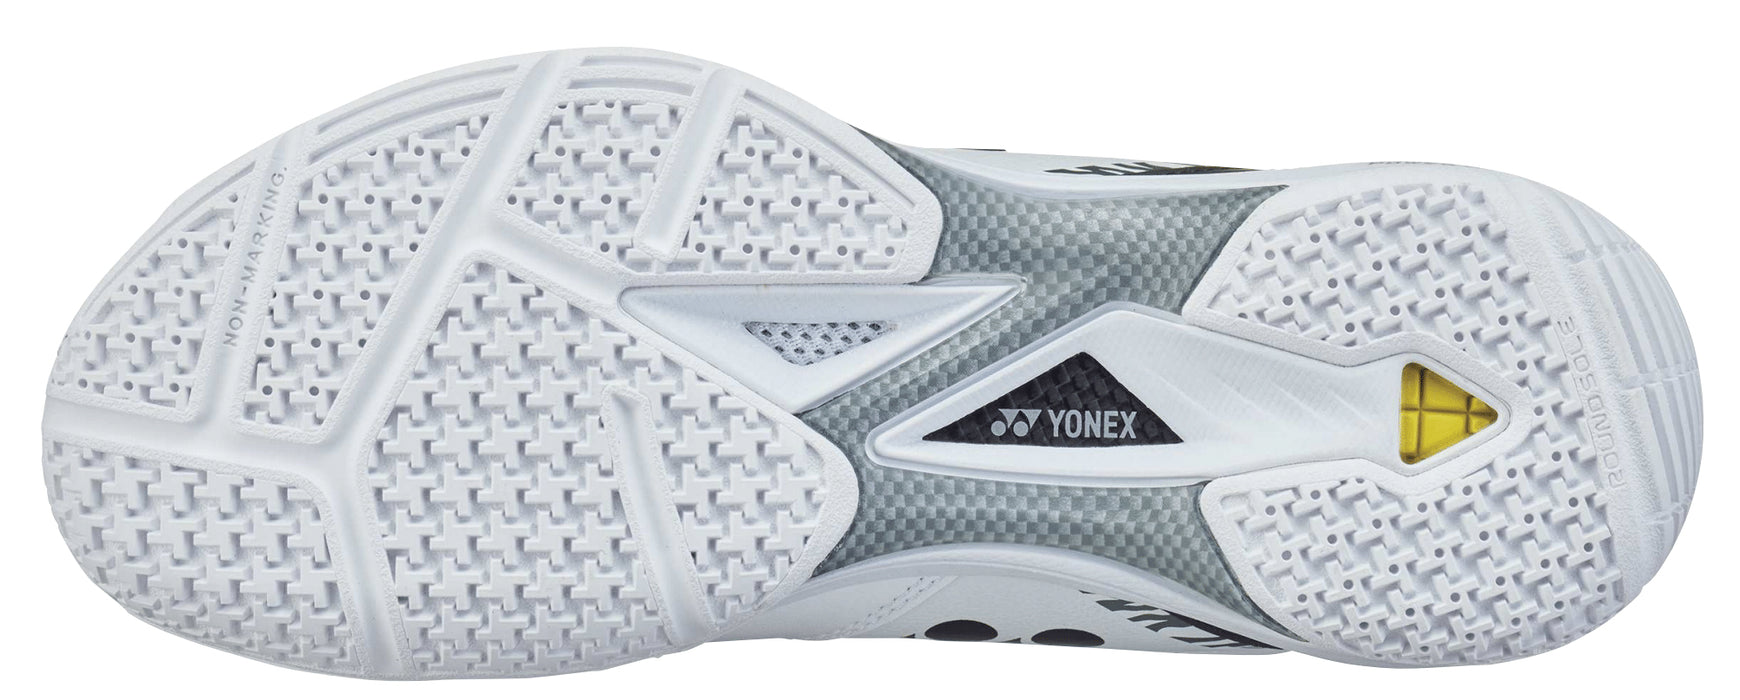 Yonex Power Cushion 65 Z3 Badminton Court Shoes (White Tiger) on sale at Badminton Warehouse